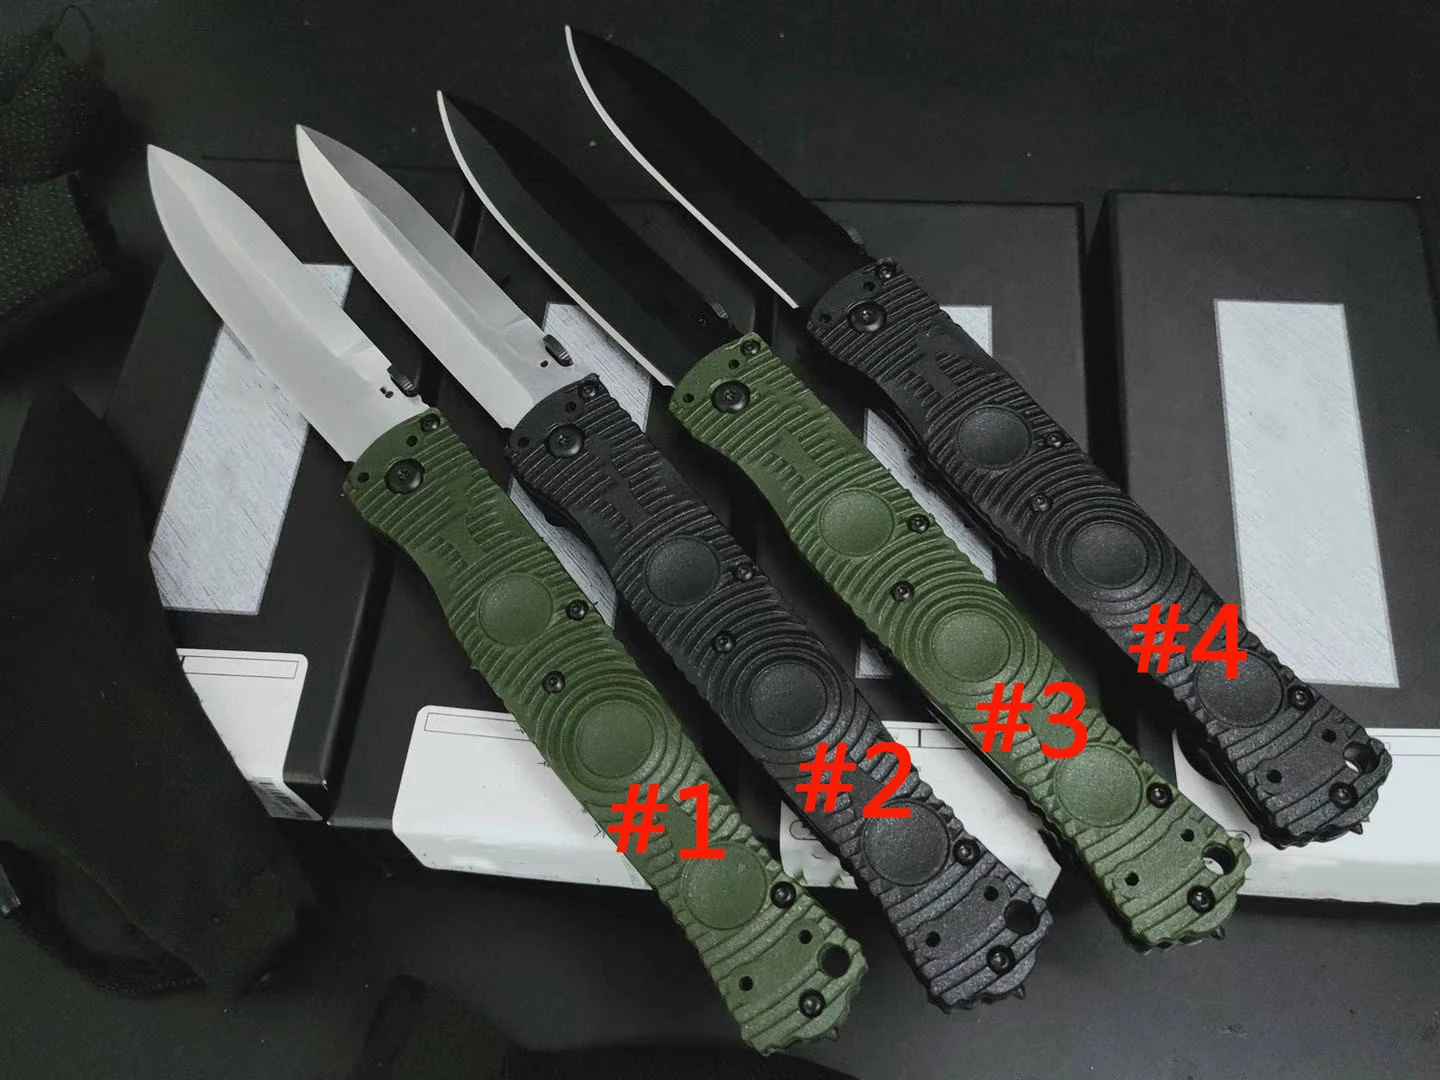 

D2 Blade Benchmade 391 Outdoor Surviving Tactical Folding Knife Camping Self-defense EDC Portable Pocket Knives